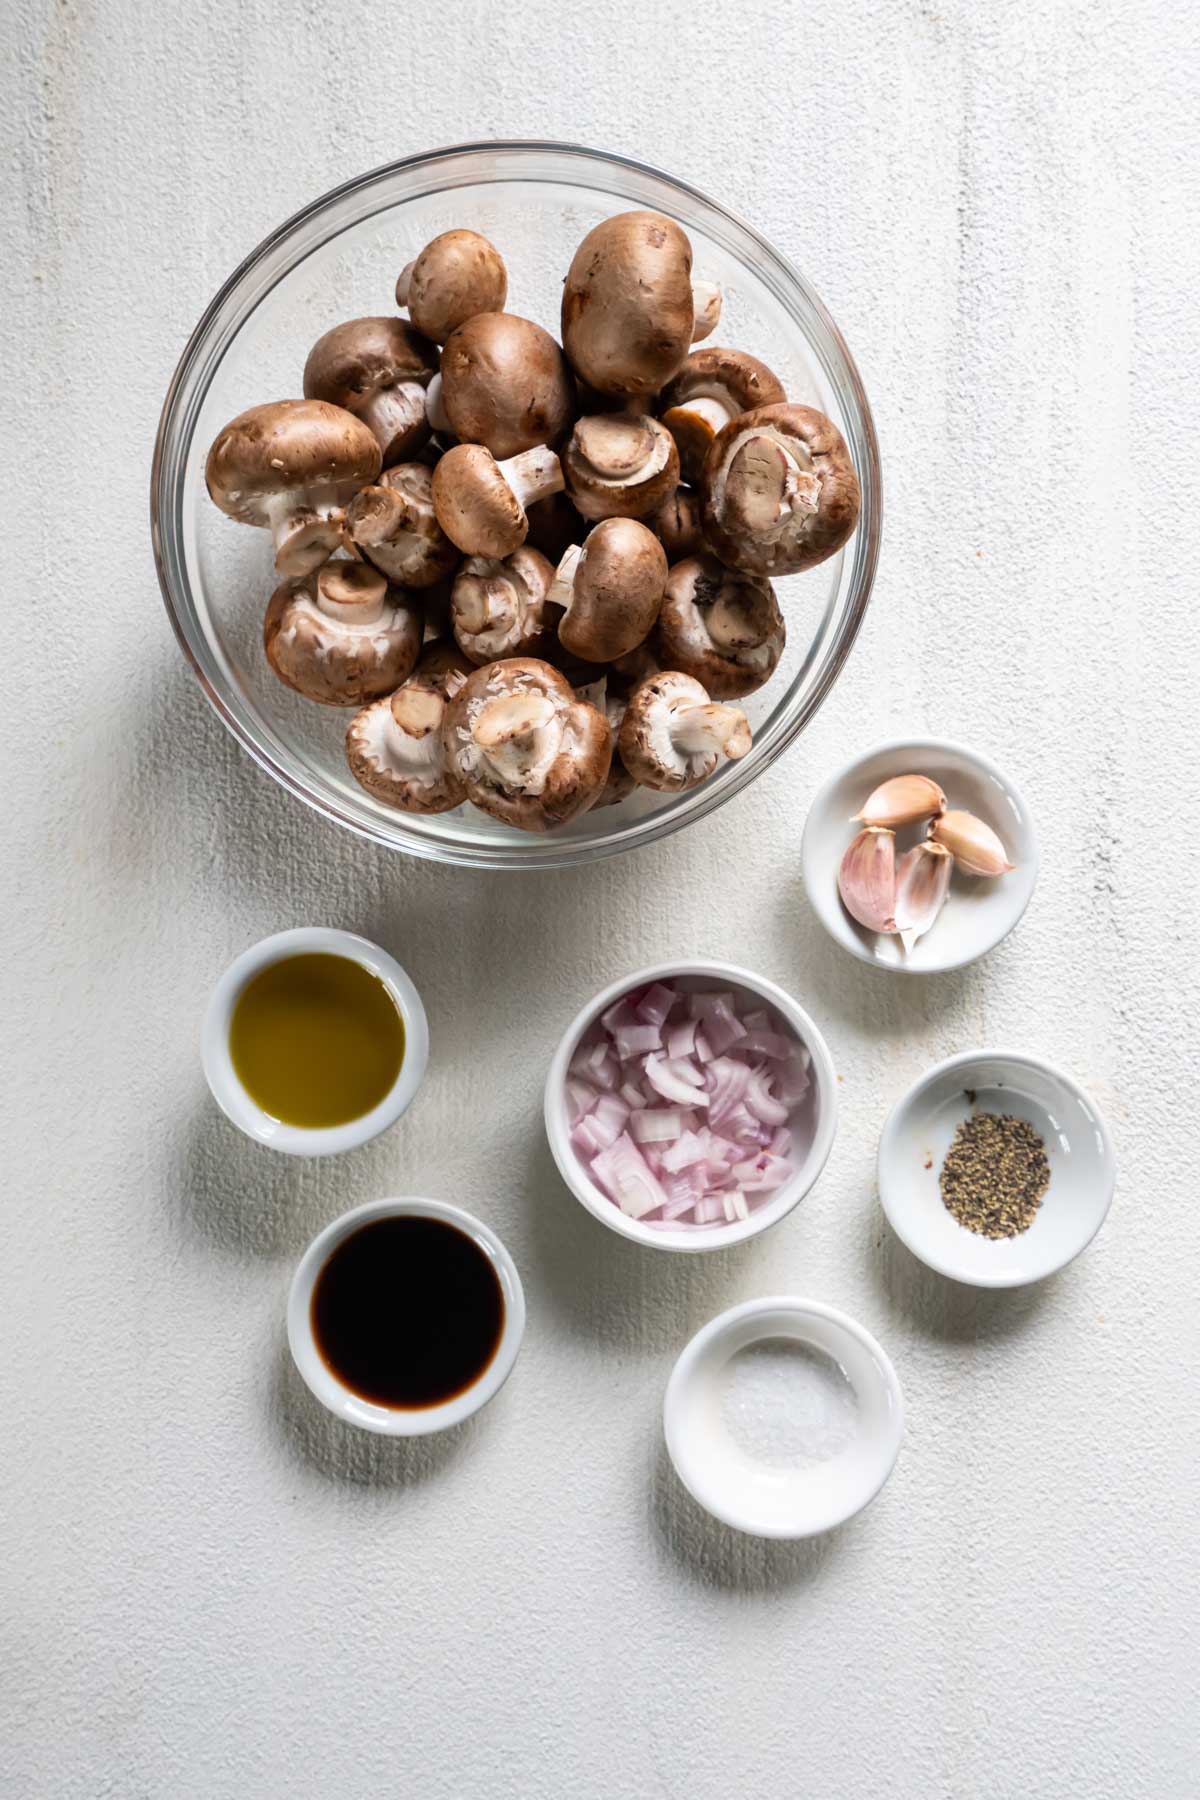 Ingredients for sauteed mushrooms recipe.